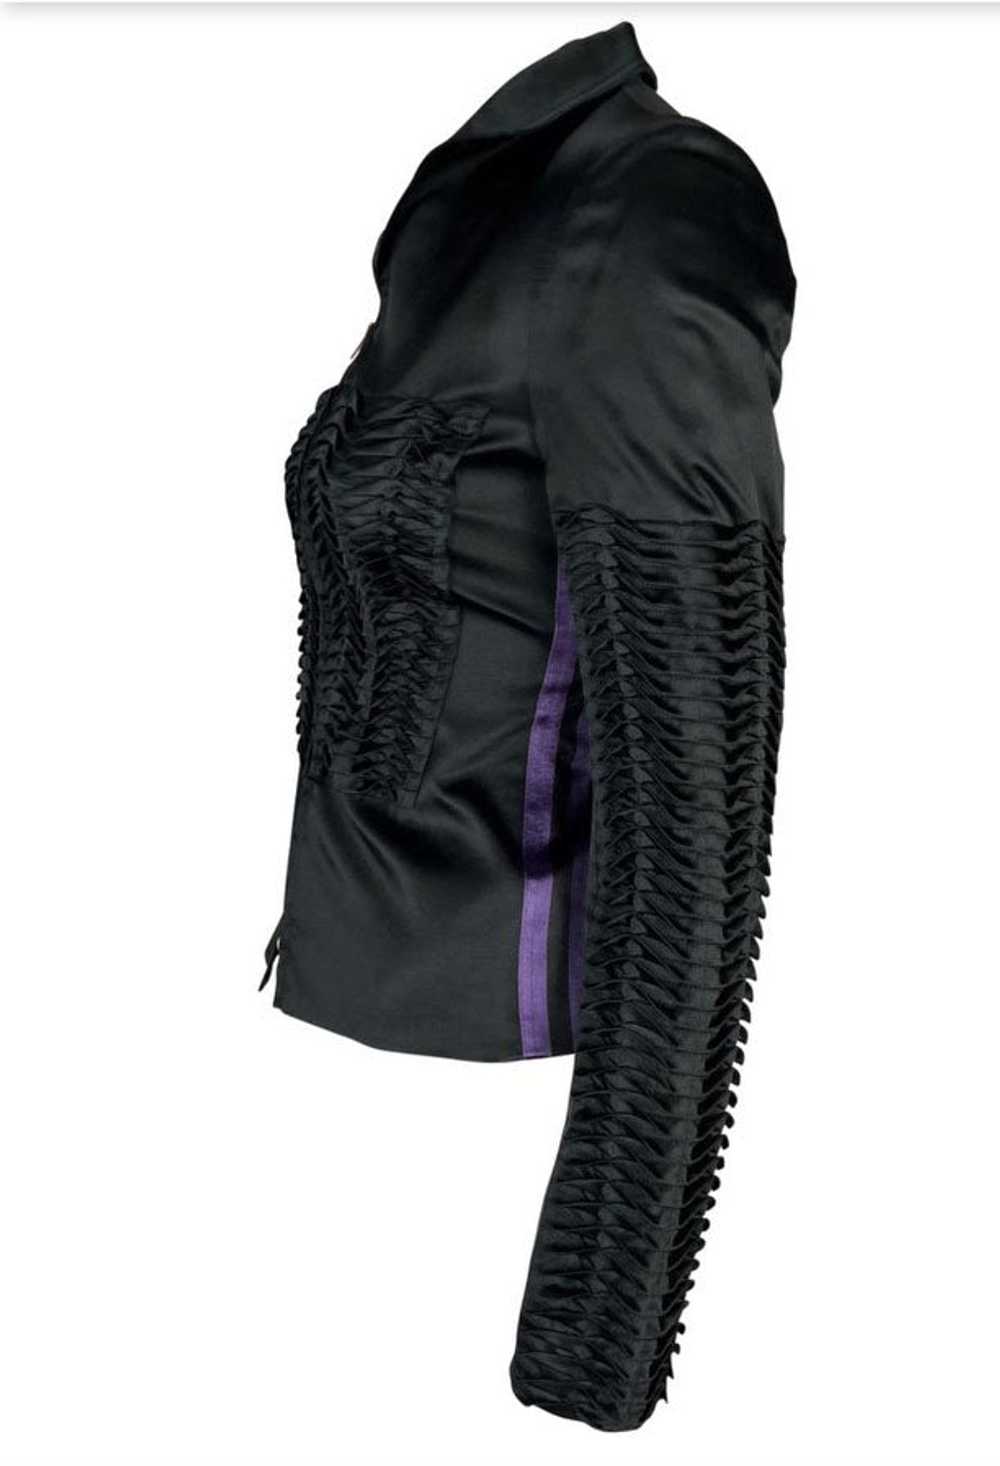 S/S 2004 GUCCI jacket corset - image 5